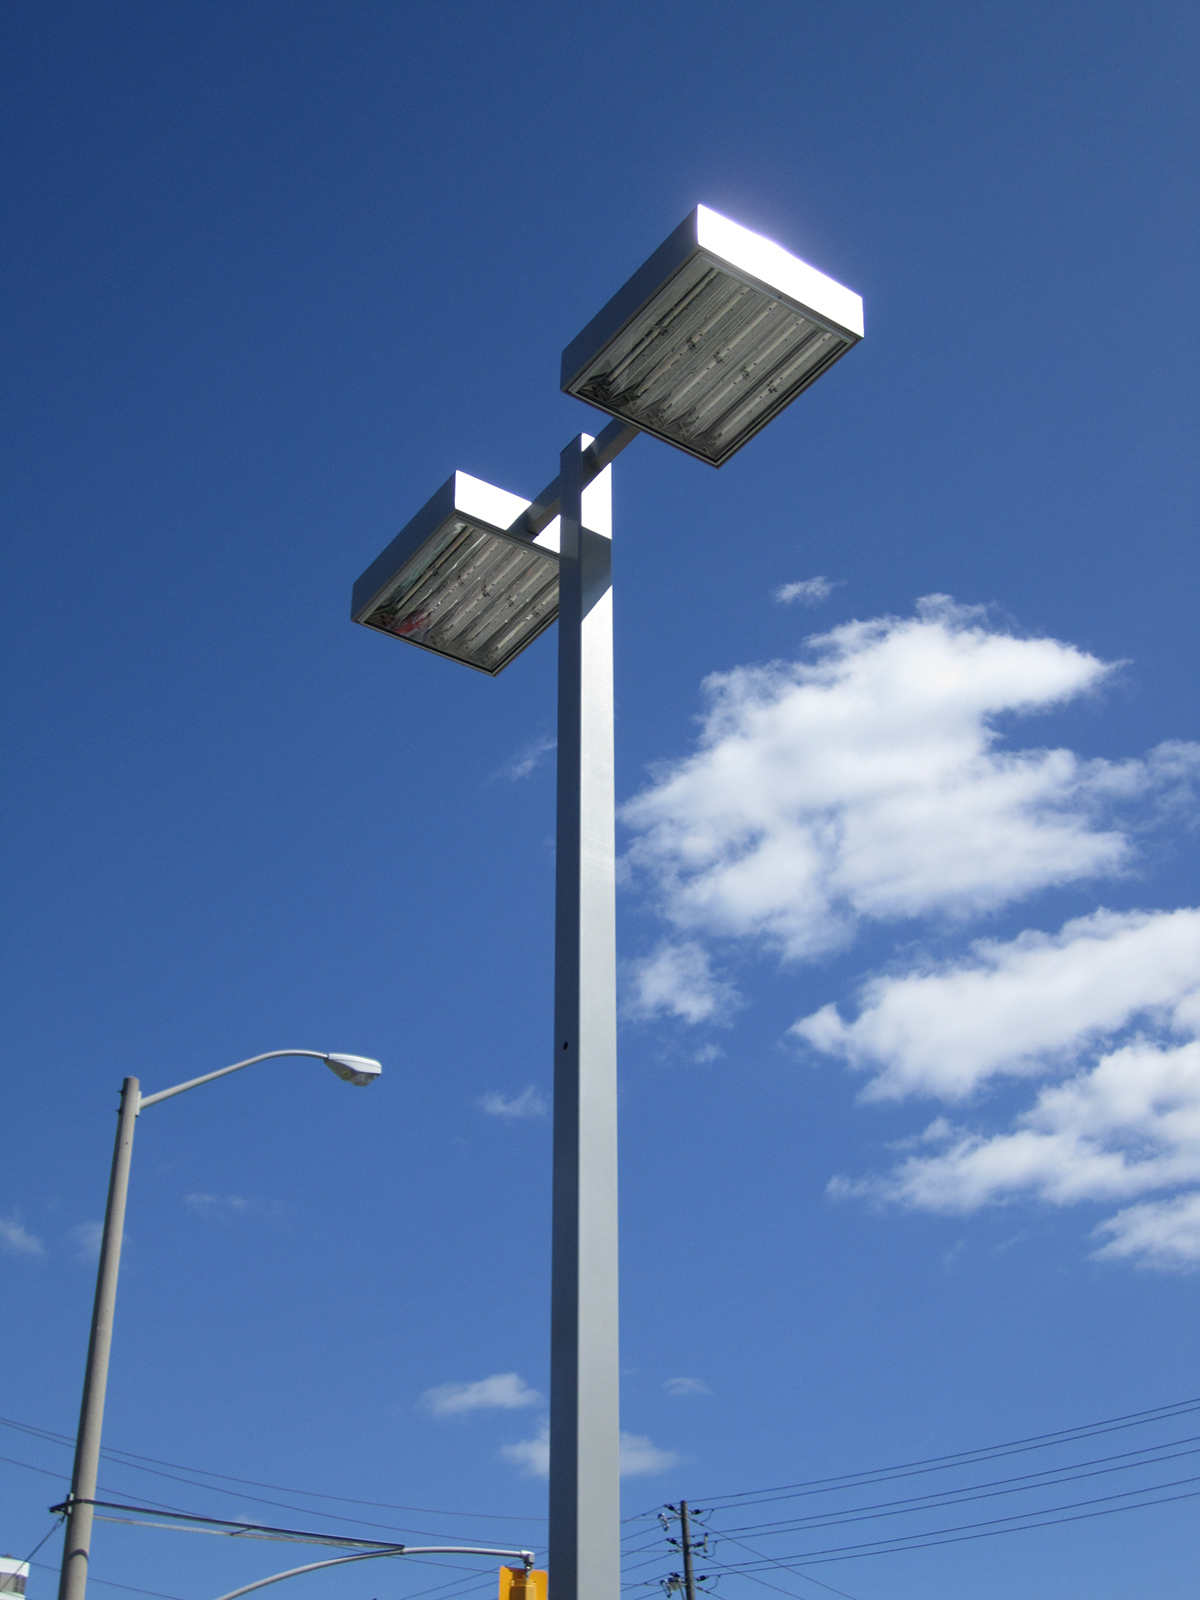 Luminaire Designs light Fixtures led HID poles petroleum lighting area lighting